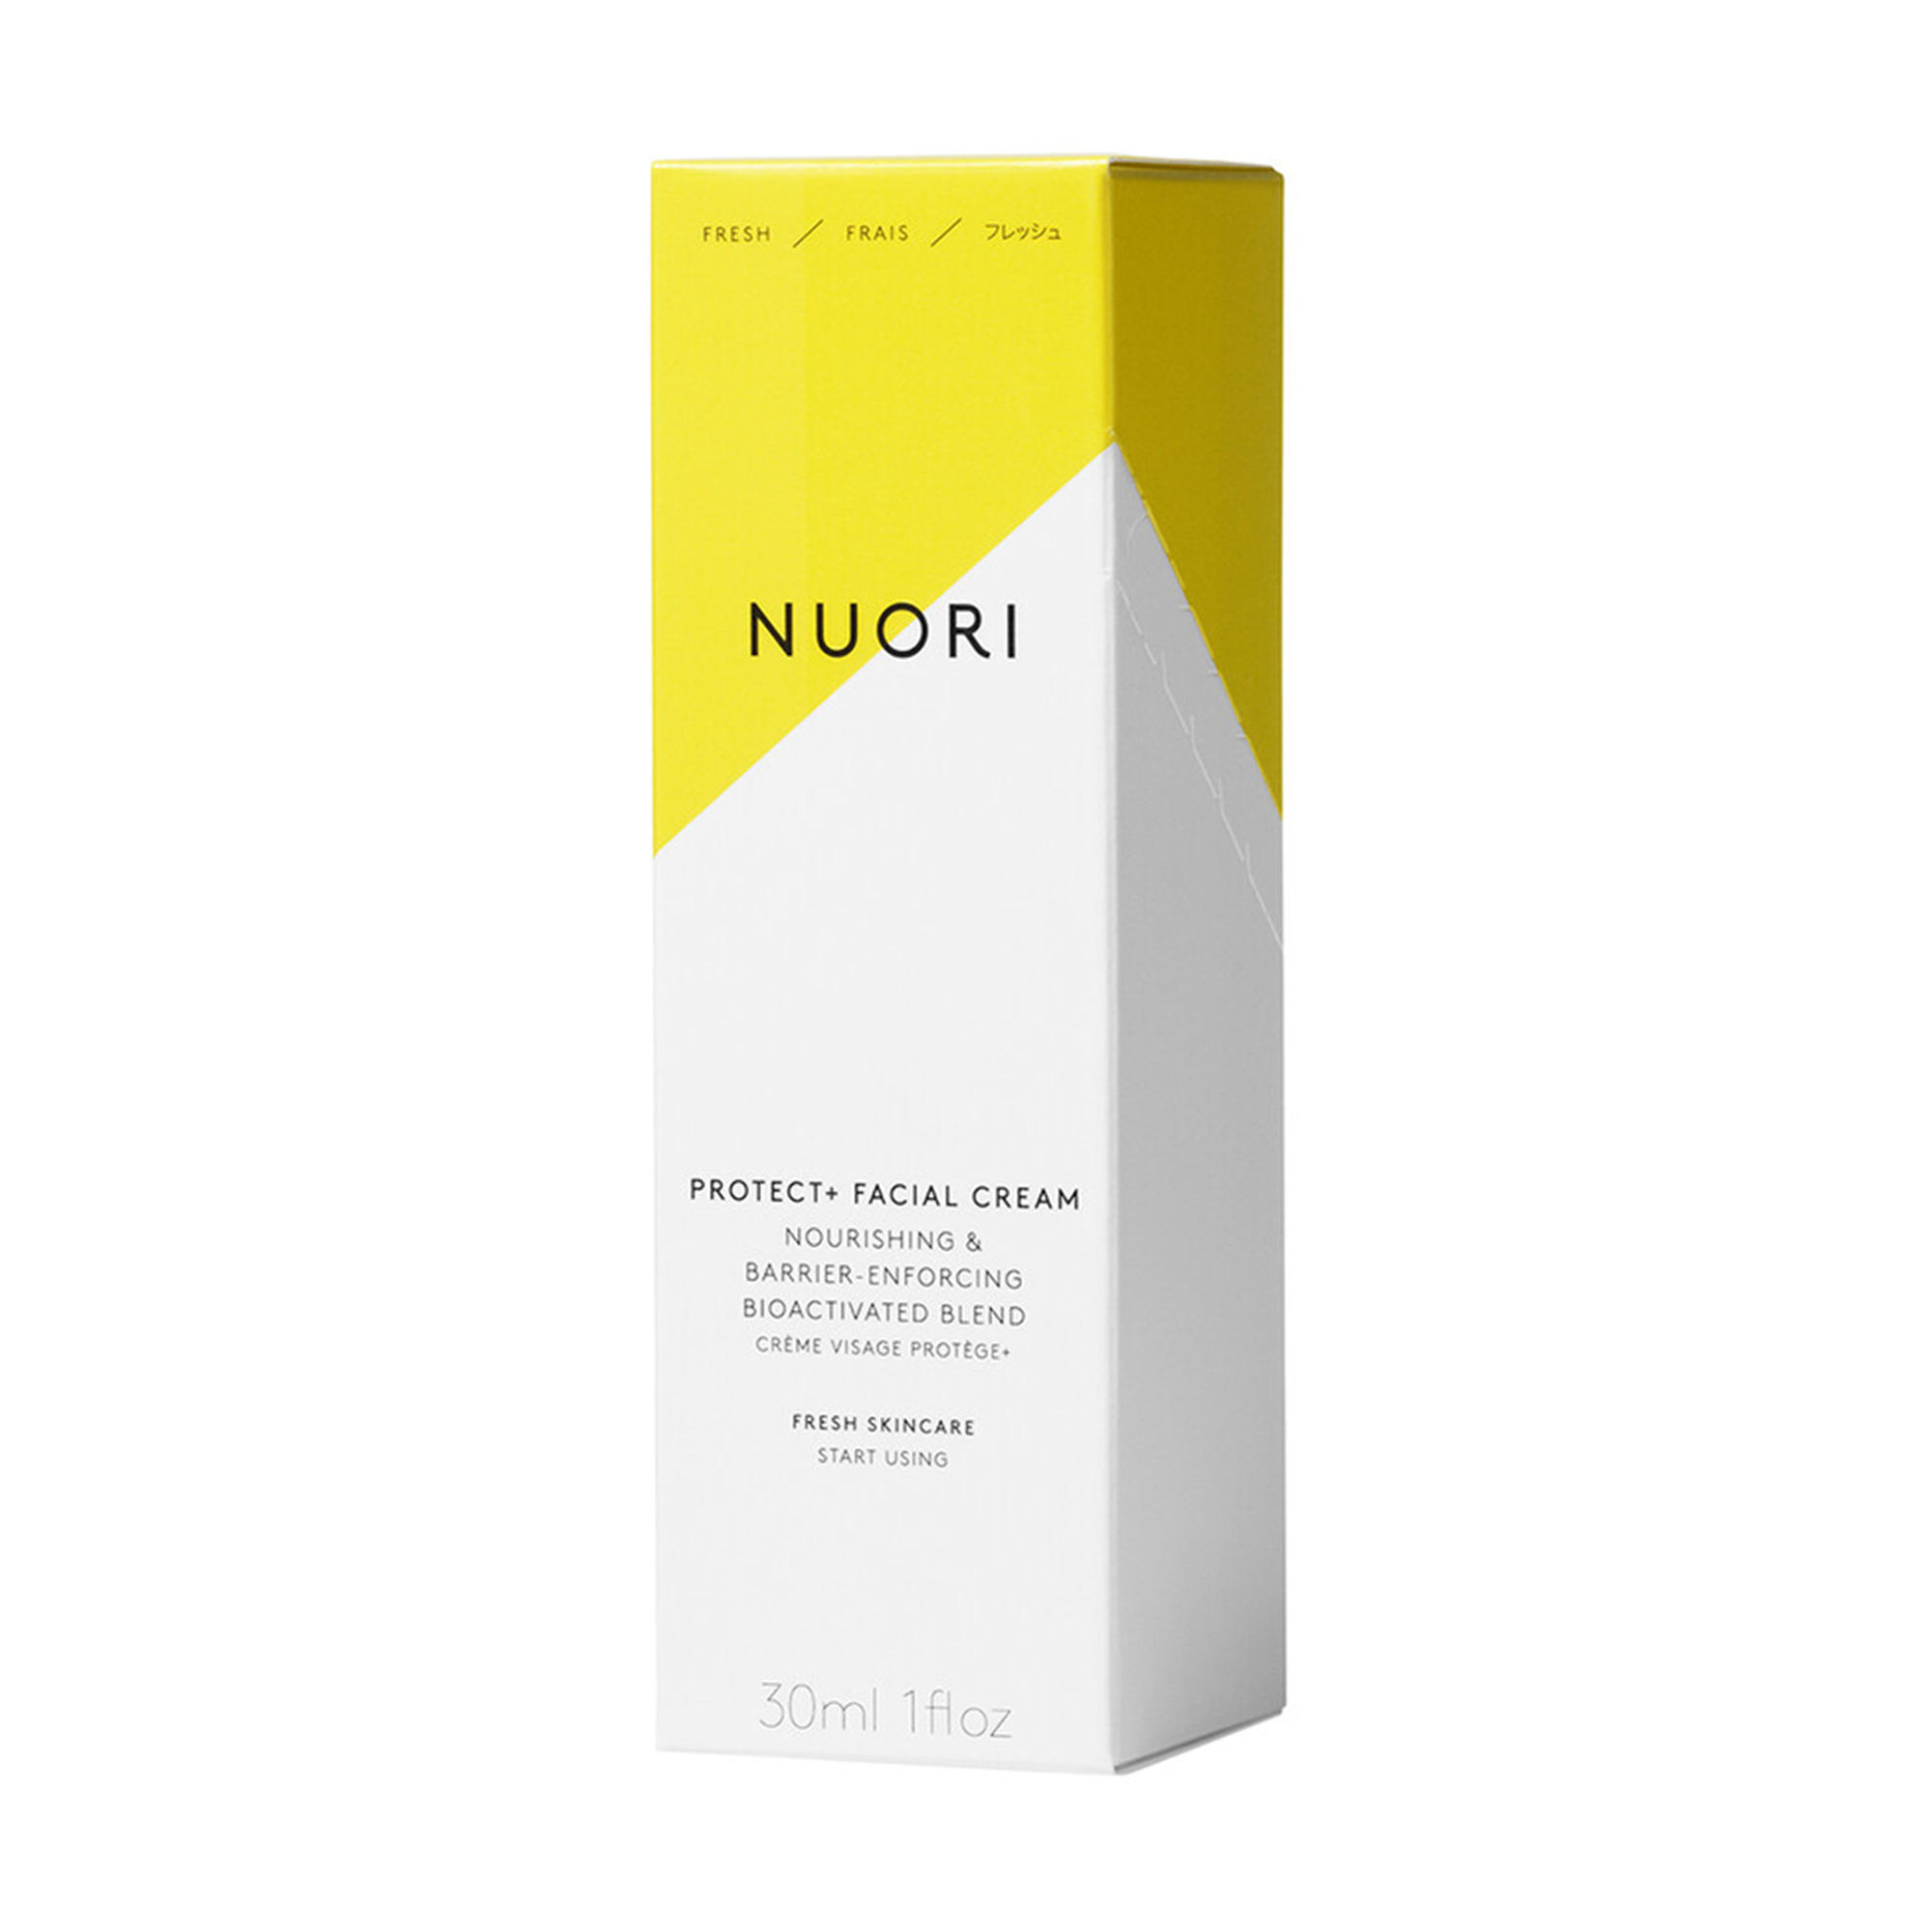 Nuori - Protect + Facial Cream -Barrier-erősítő Bioaktivált Arckrém